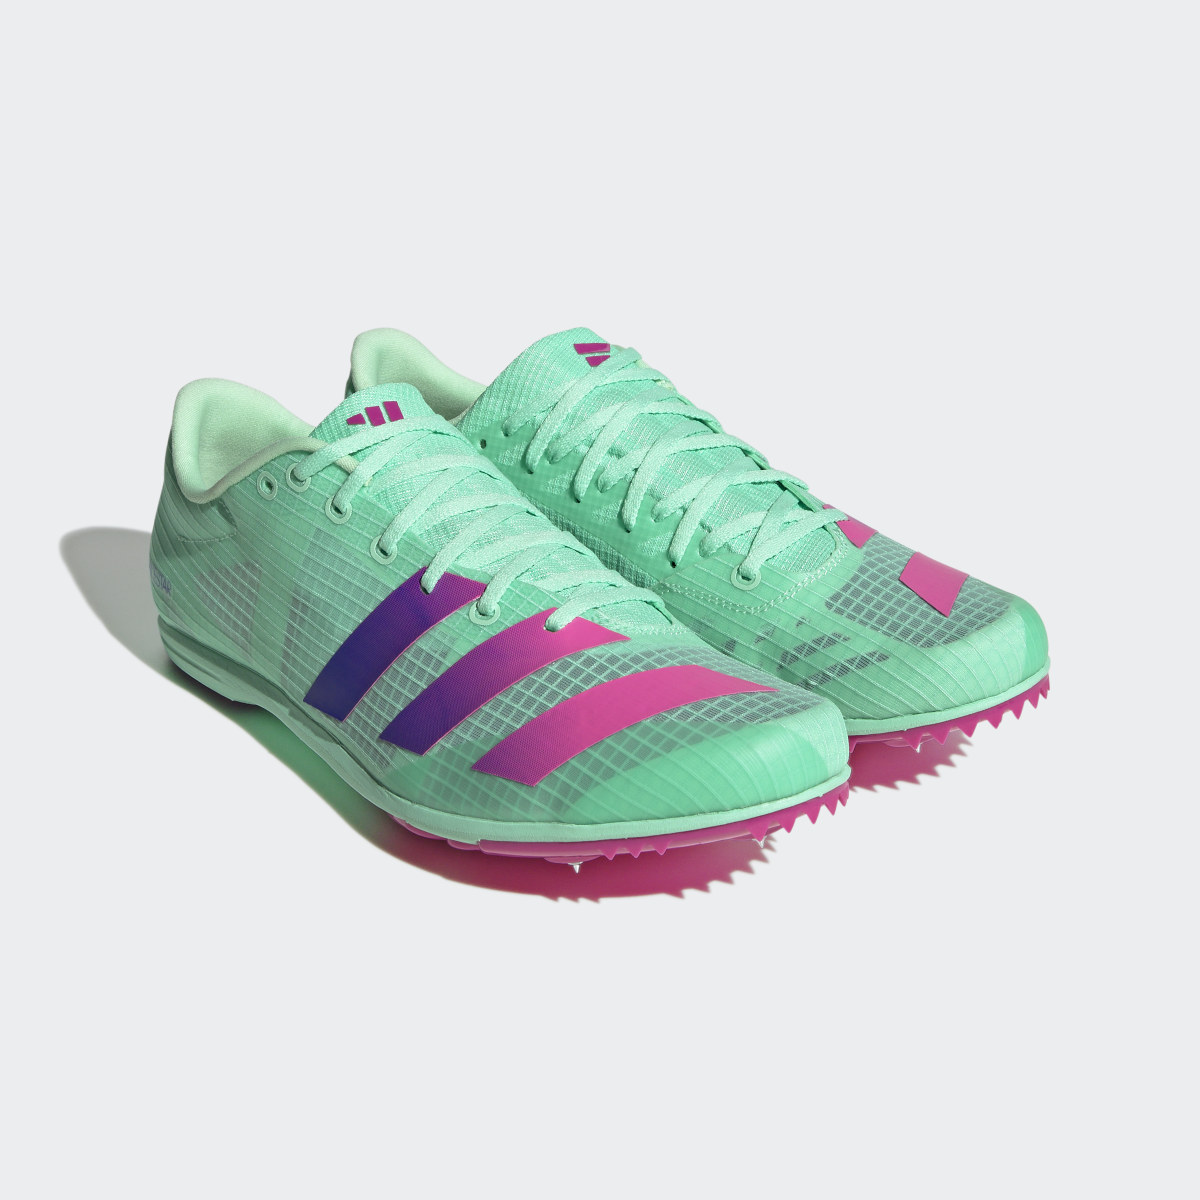 Adidas Adizero DistanceStar Running Shoes. 5